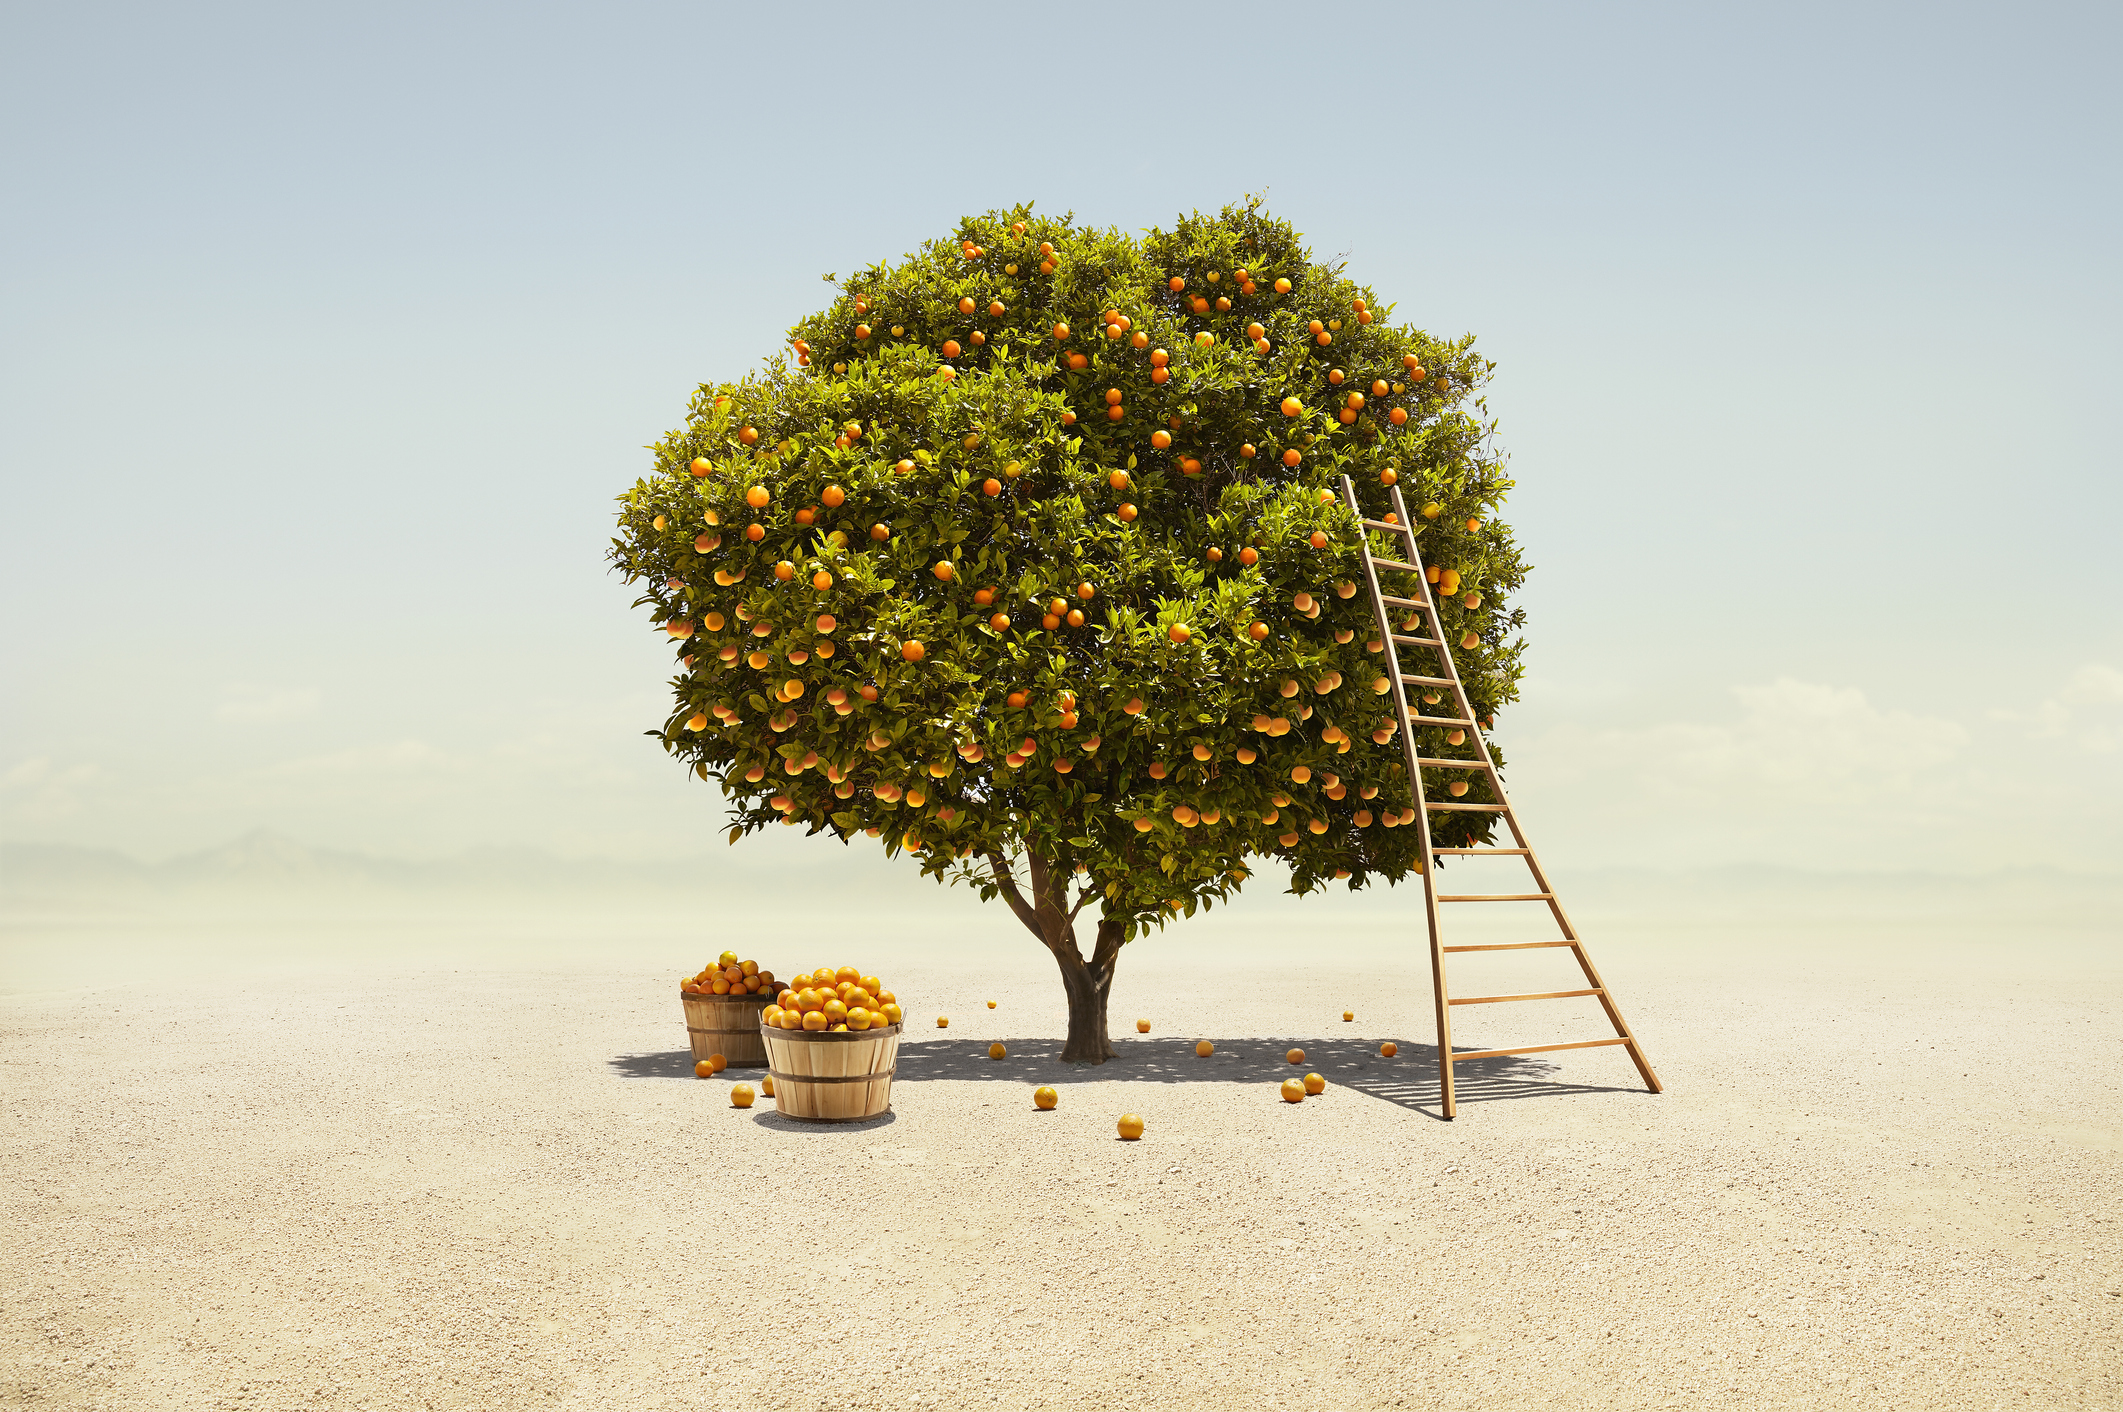 Harvest a fully-fruited orange tree in barren Southern California desert landscape; first-time investor thrives in downturn